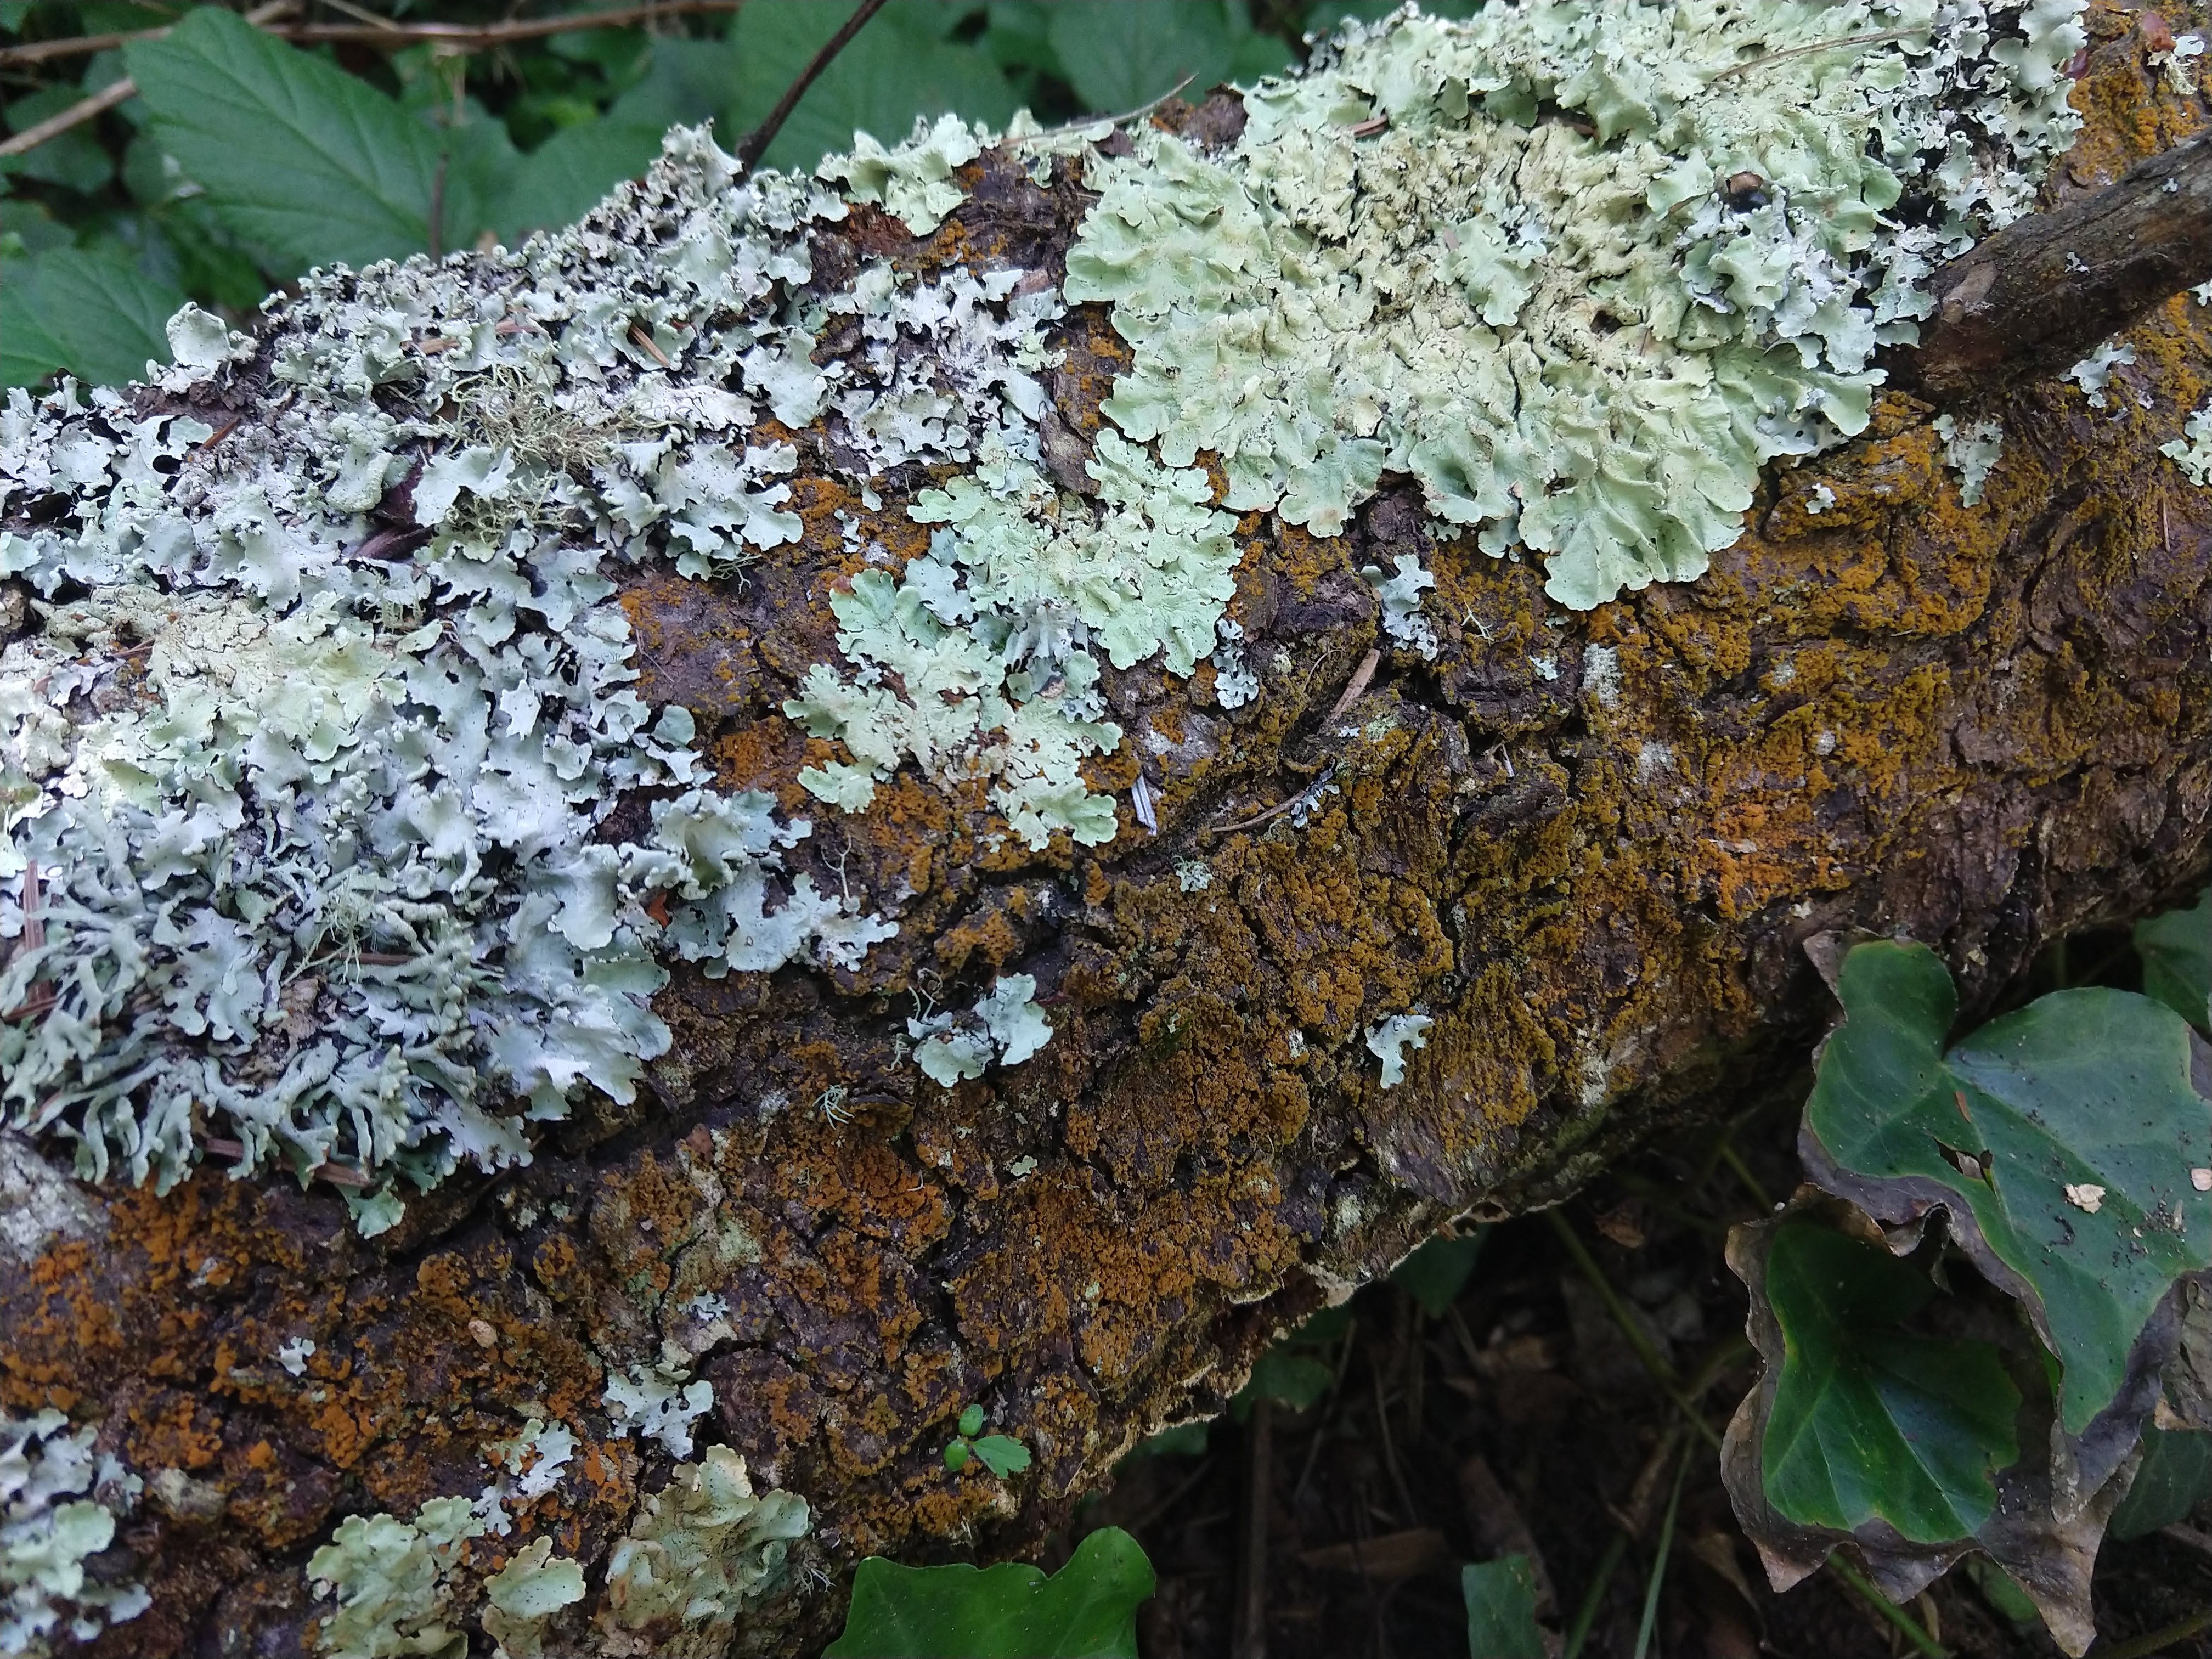 Lichens and orange free-living algae on a log